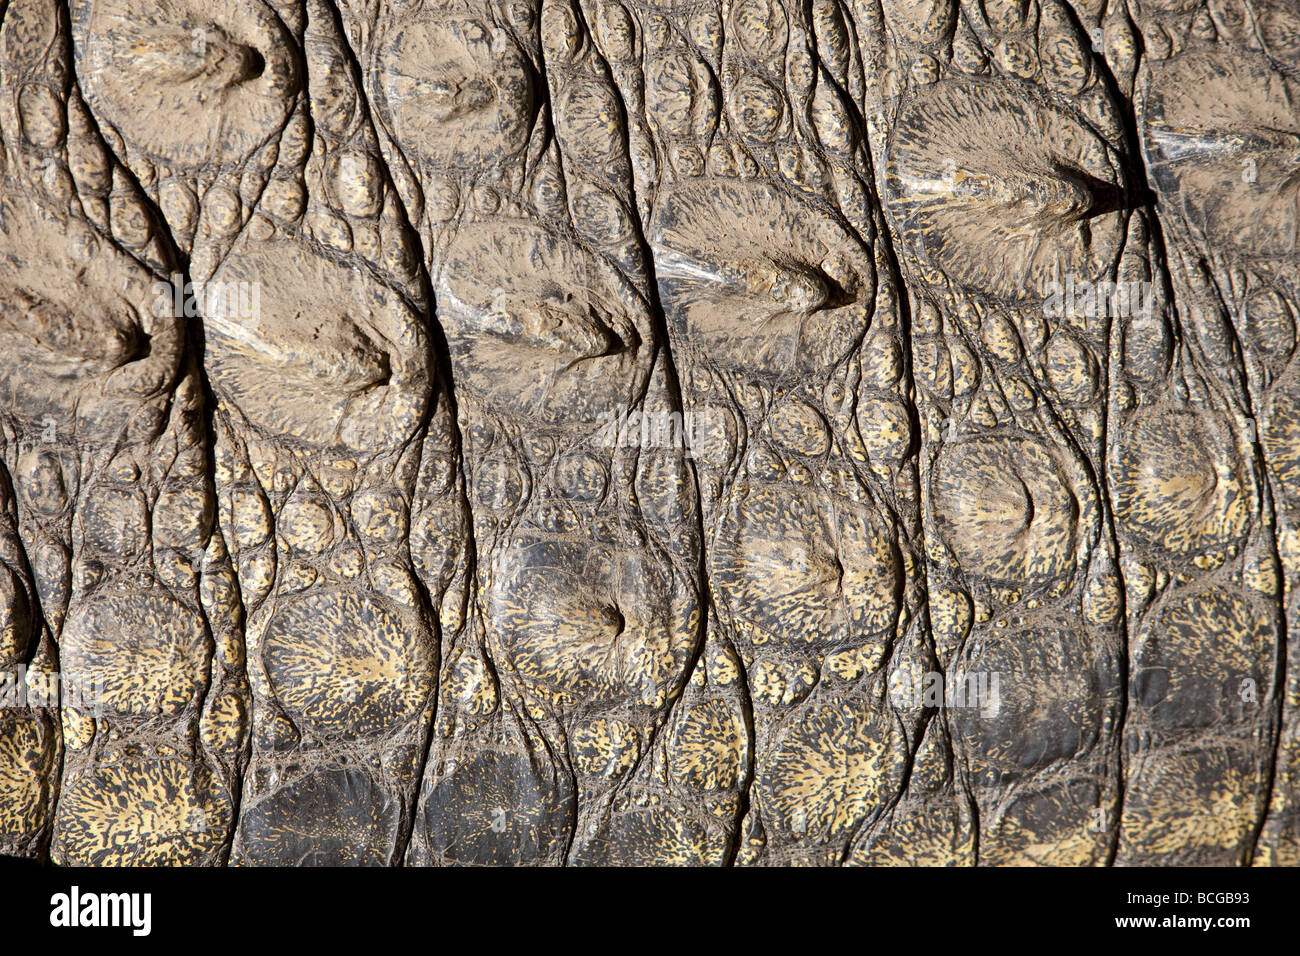 Close up shot of Nile crocodile scales Stock Photo